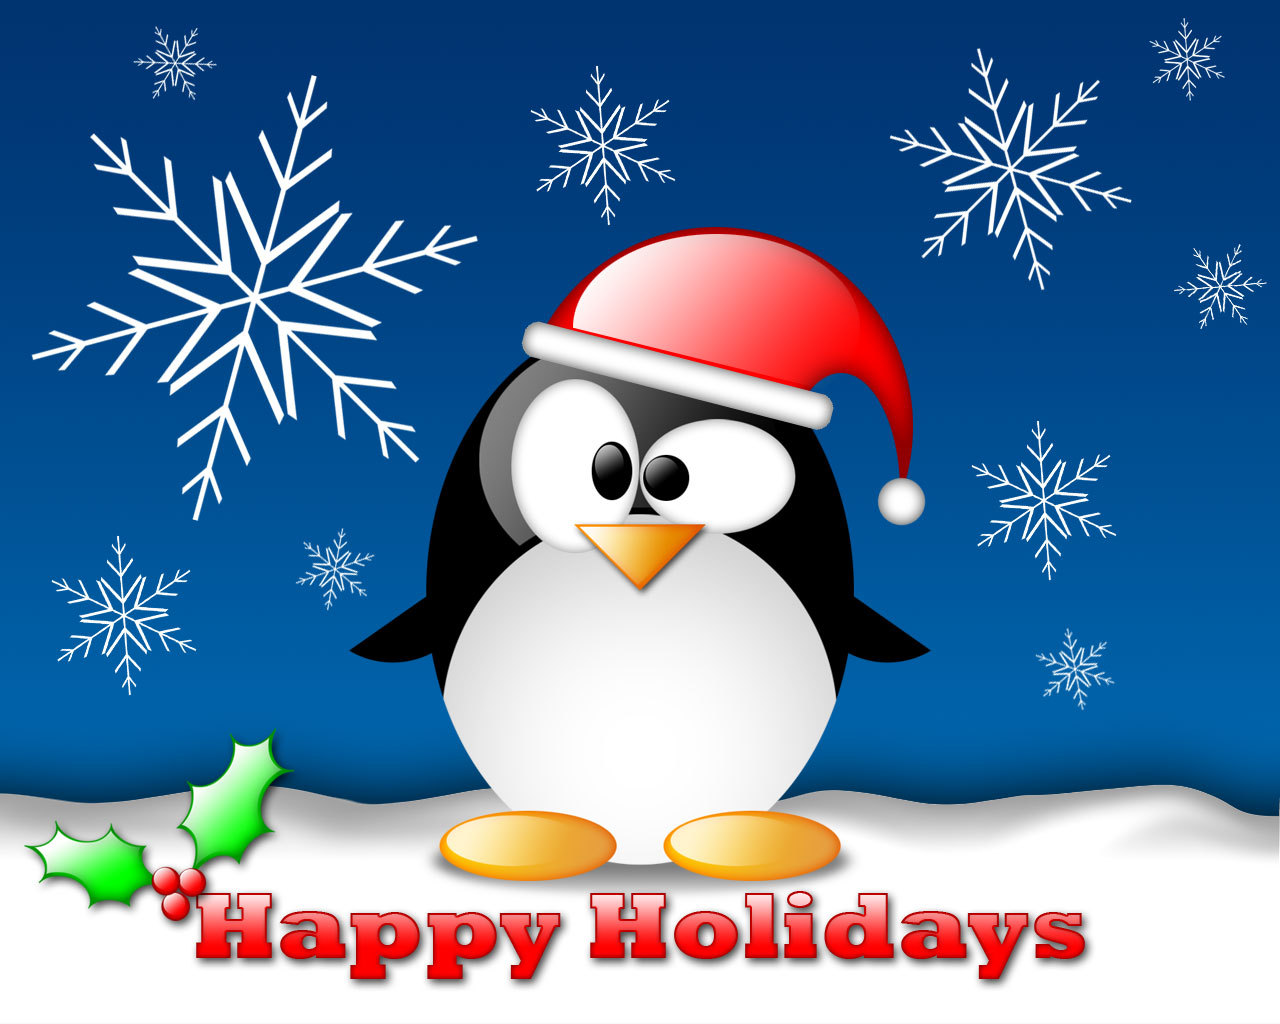 http://1.bp.blogspot.com/-gGakFCKTYWY/TvPBuHF7T2I/AAAAAAAAAN8/Ypk5vwKdvys/s1600/happy-holidays.jpg